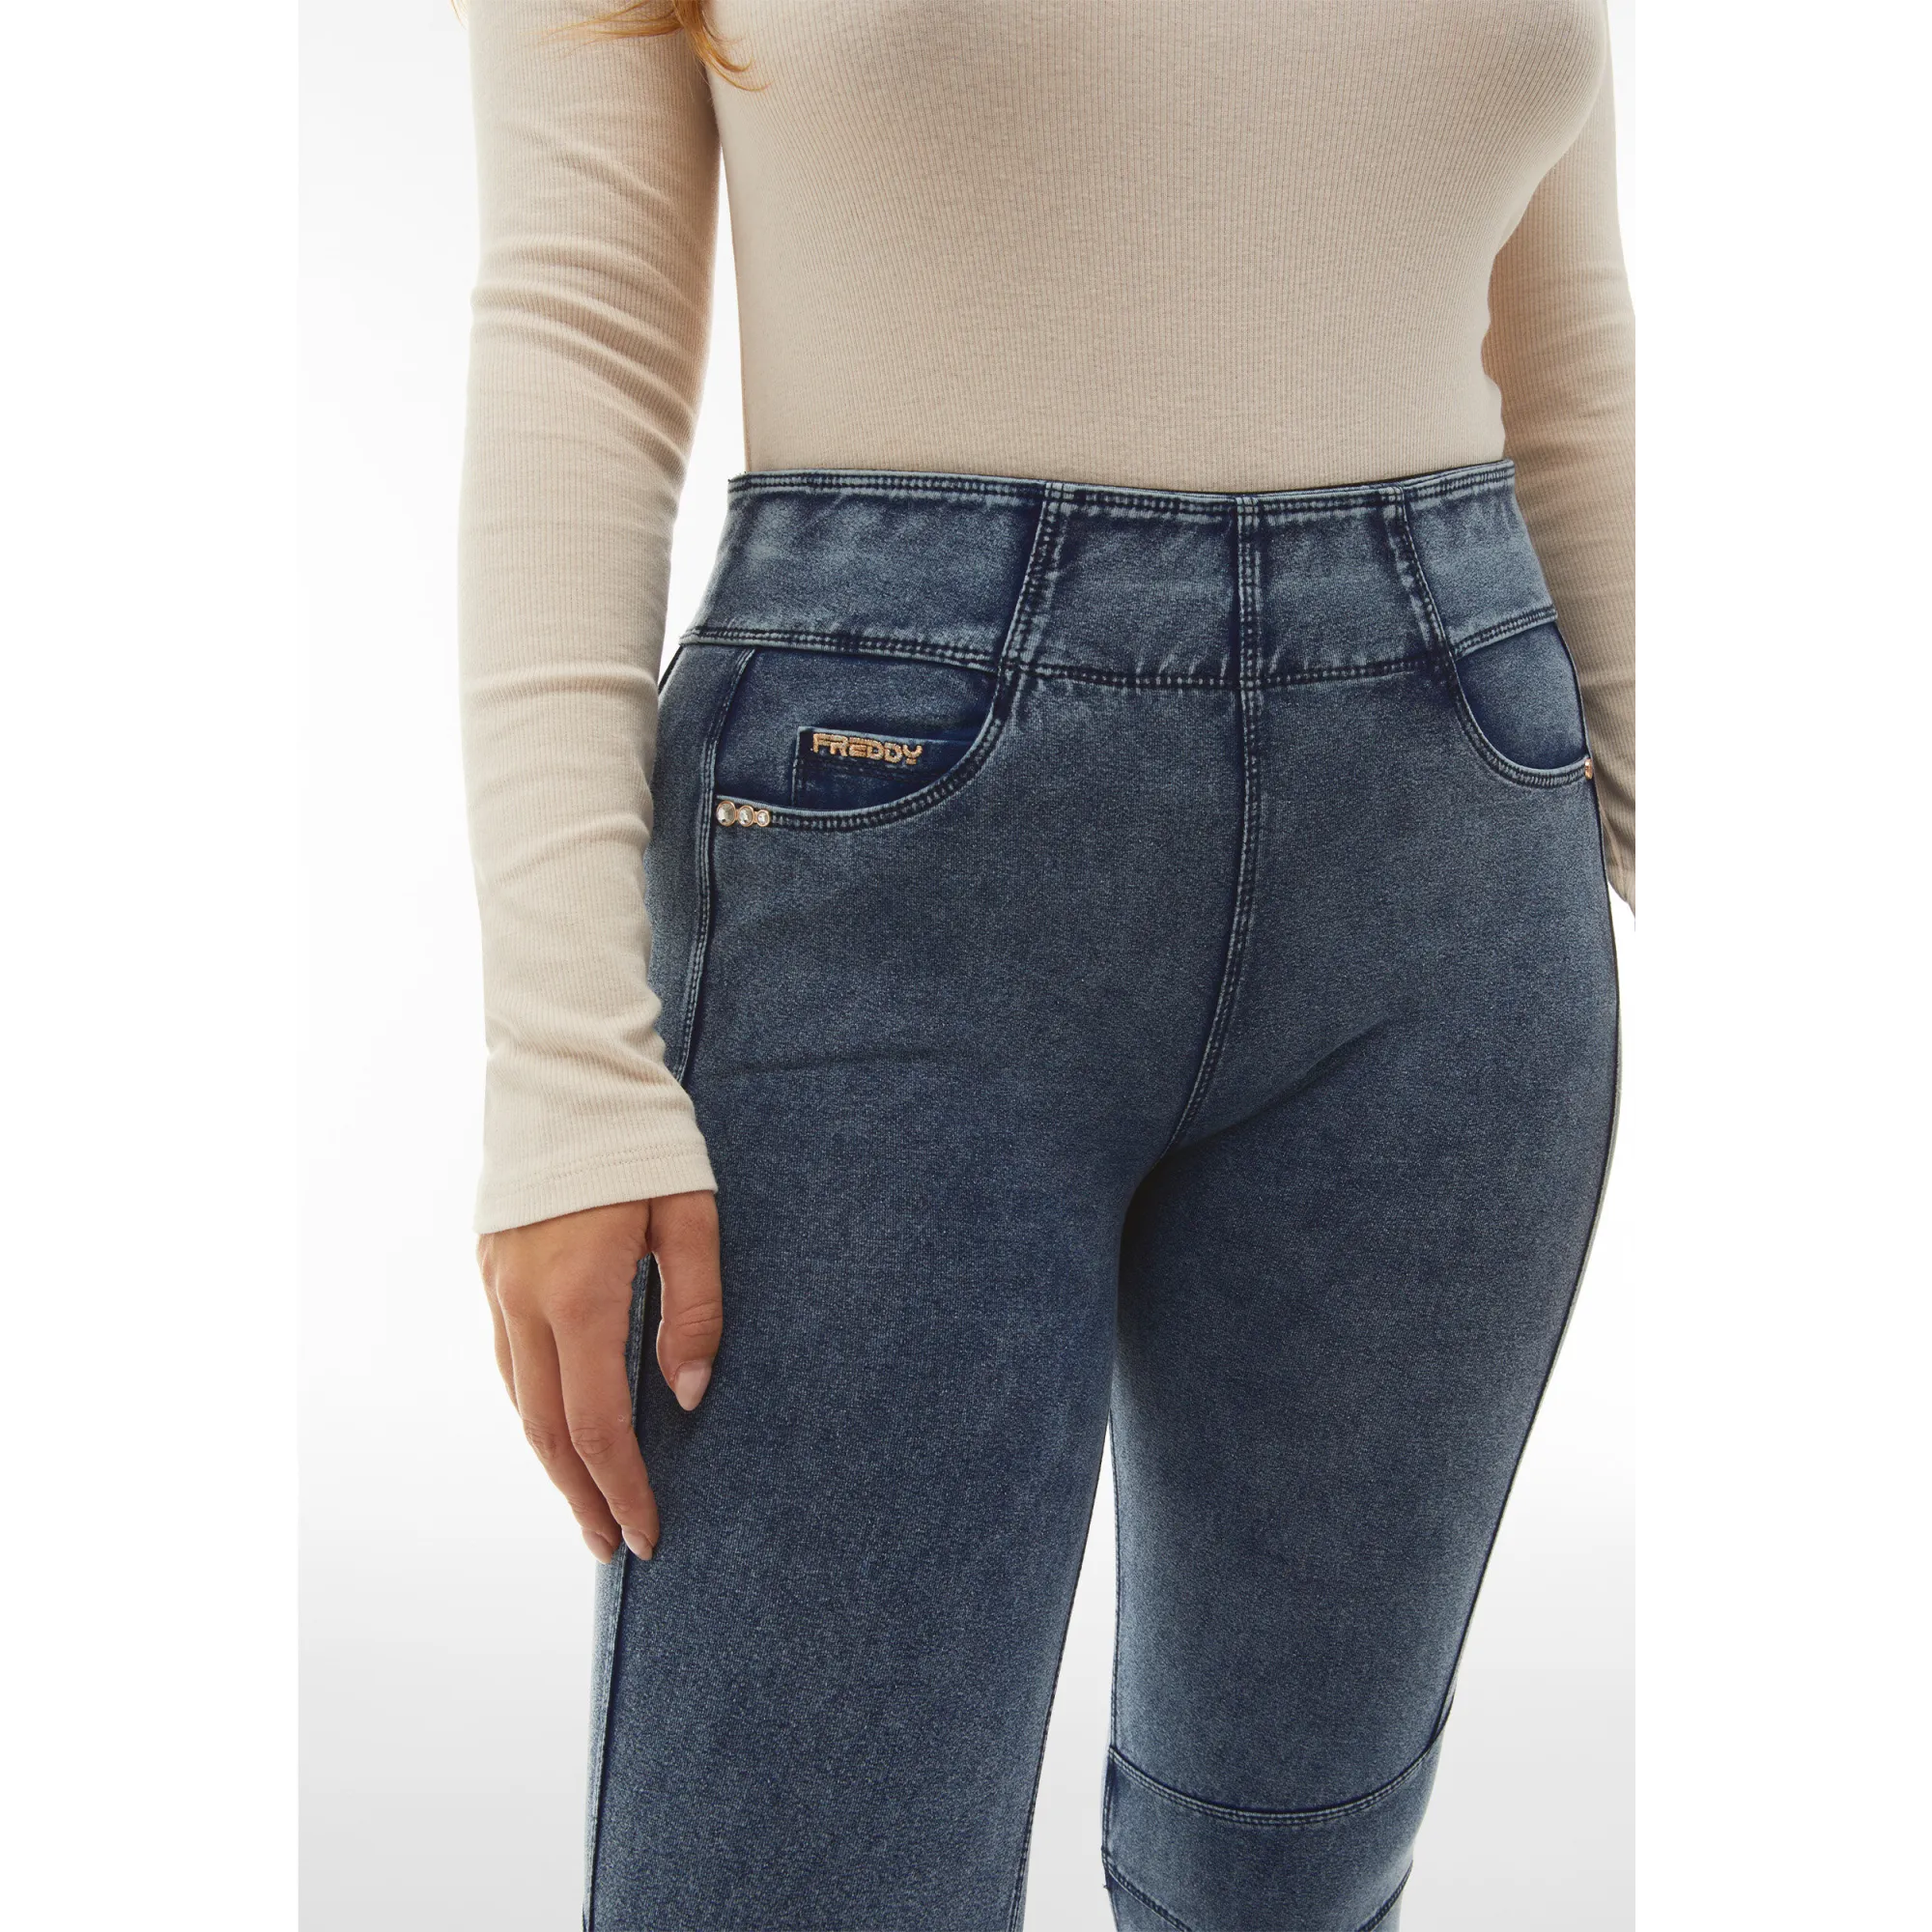 Freddy N.O.W.® Yoga Damen Comfort Jeans - 7/8 Mid Waist Skinny - Blau - Blaue Nähte - J109B